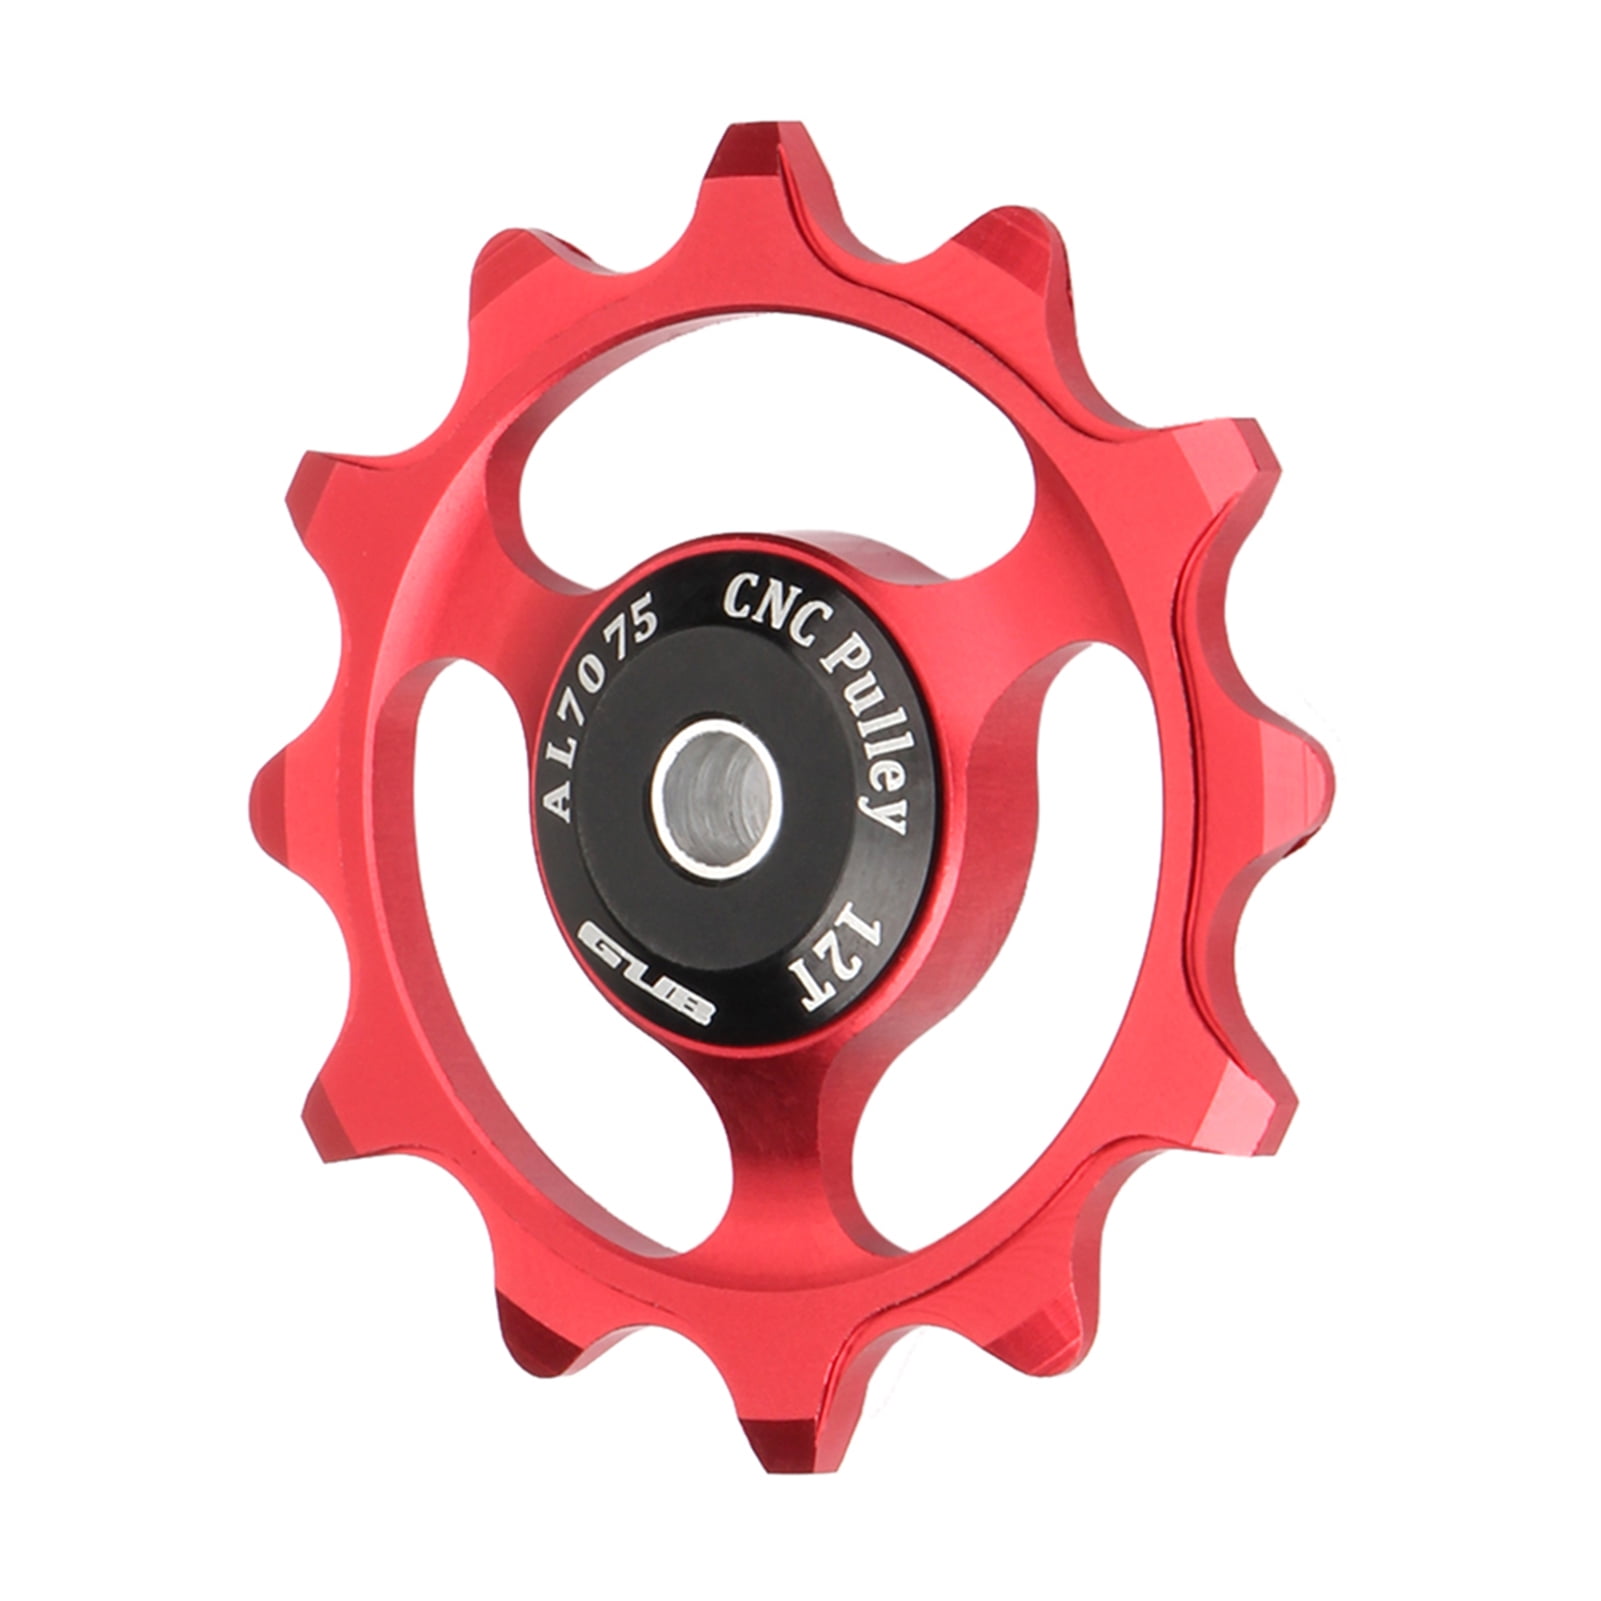 Mountain MTB Bike Cycling Aluminium Jockey Wheel Rear Derailleur Pulley 12t 